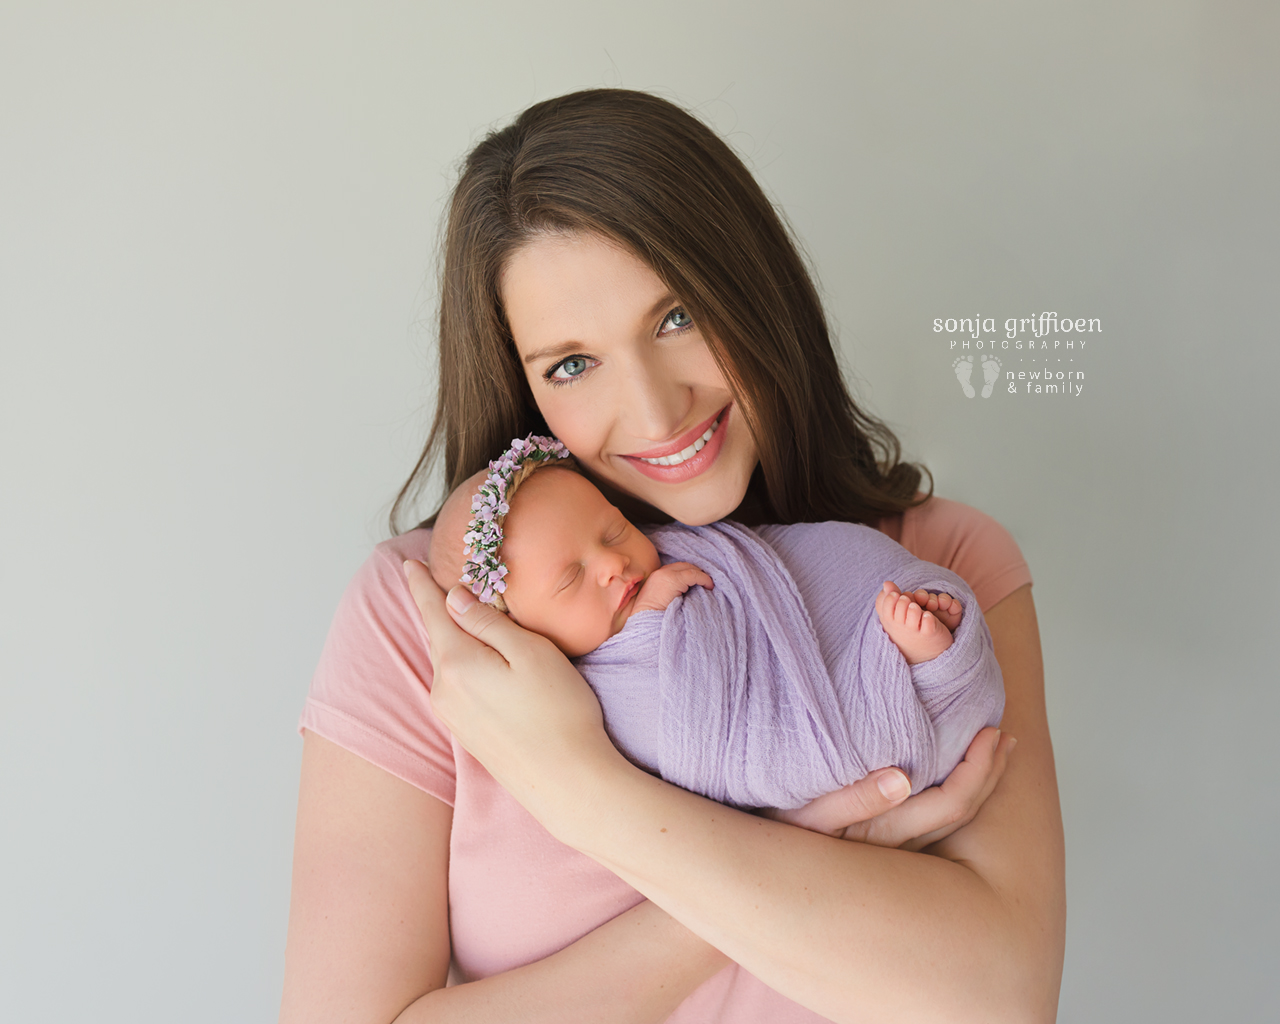 Vivienne-W-Newborn-Brisbane-Newborn-Photographer-Sonja-Griffioen-06b.jpg